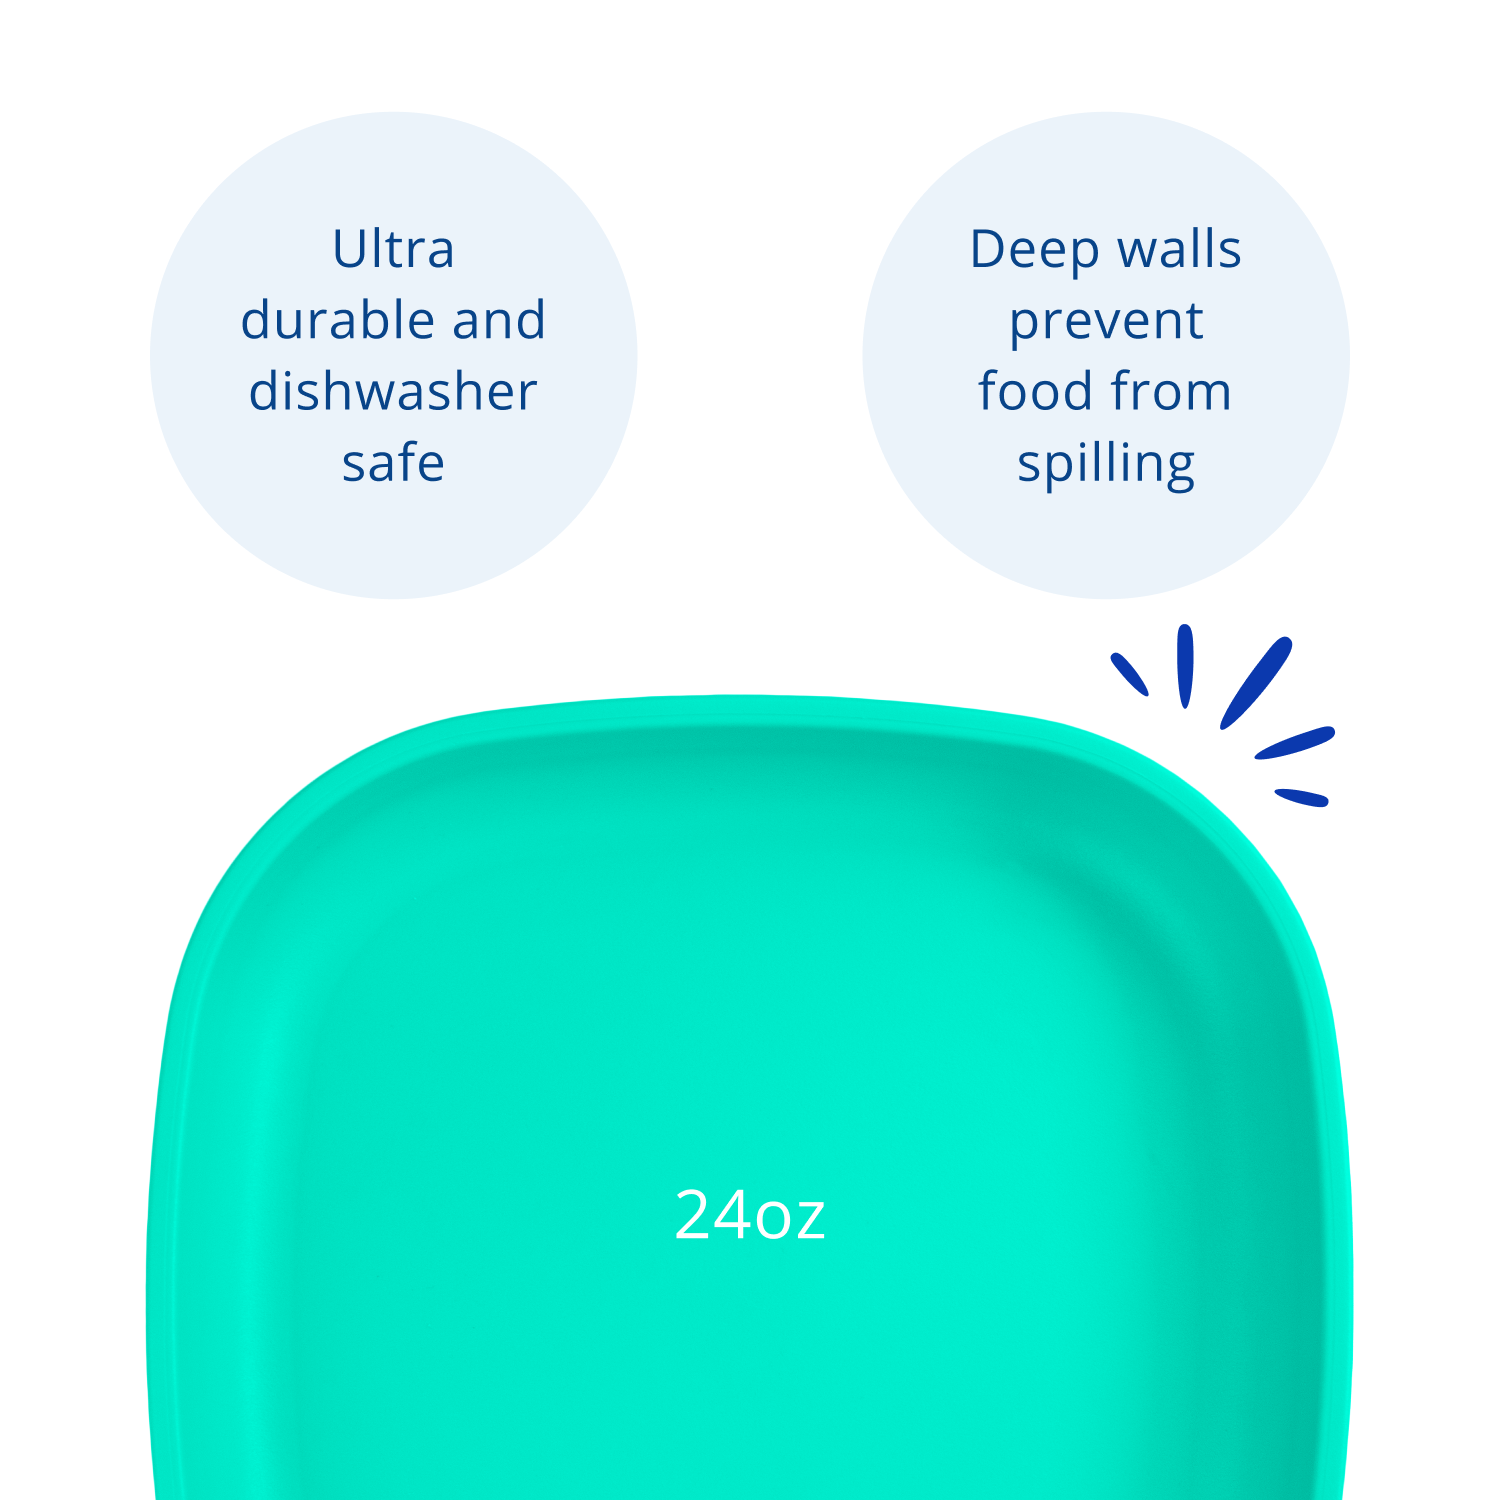 New UNIQUE BIG 11” Open House Style Tupperware Beautiful Plates in Aqua  Color